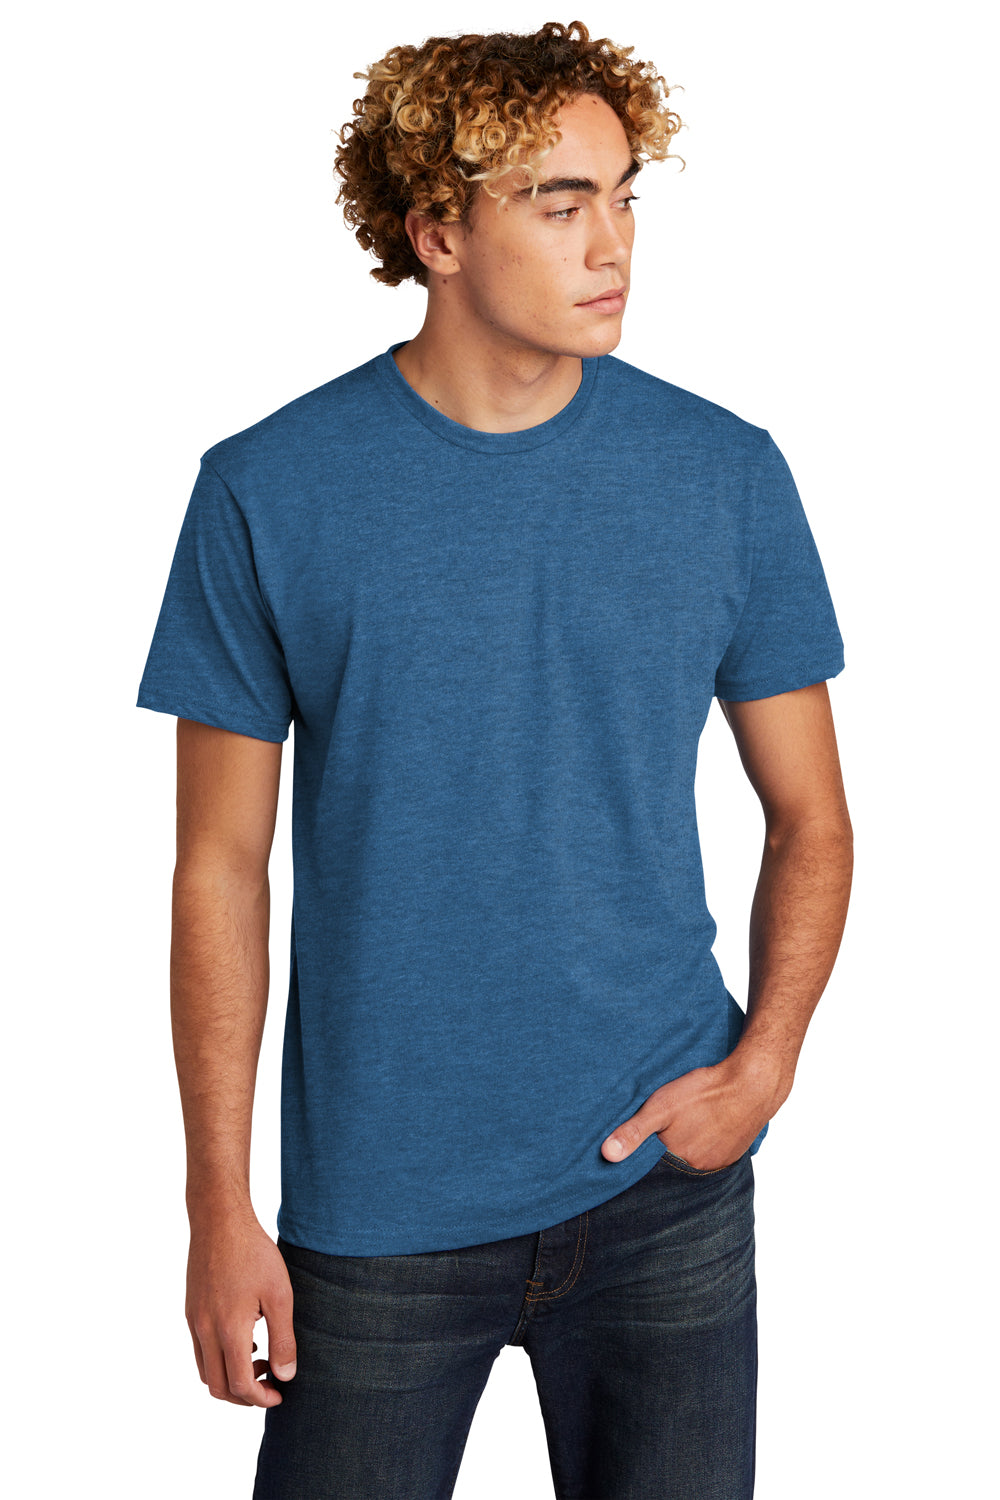 Next Level NL6210/N6210/6210 Mens CVC Jersey Short Sleeve Crewneck T-Shirt Heather Cool Blue Front